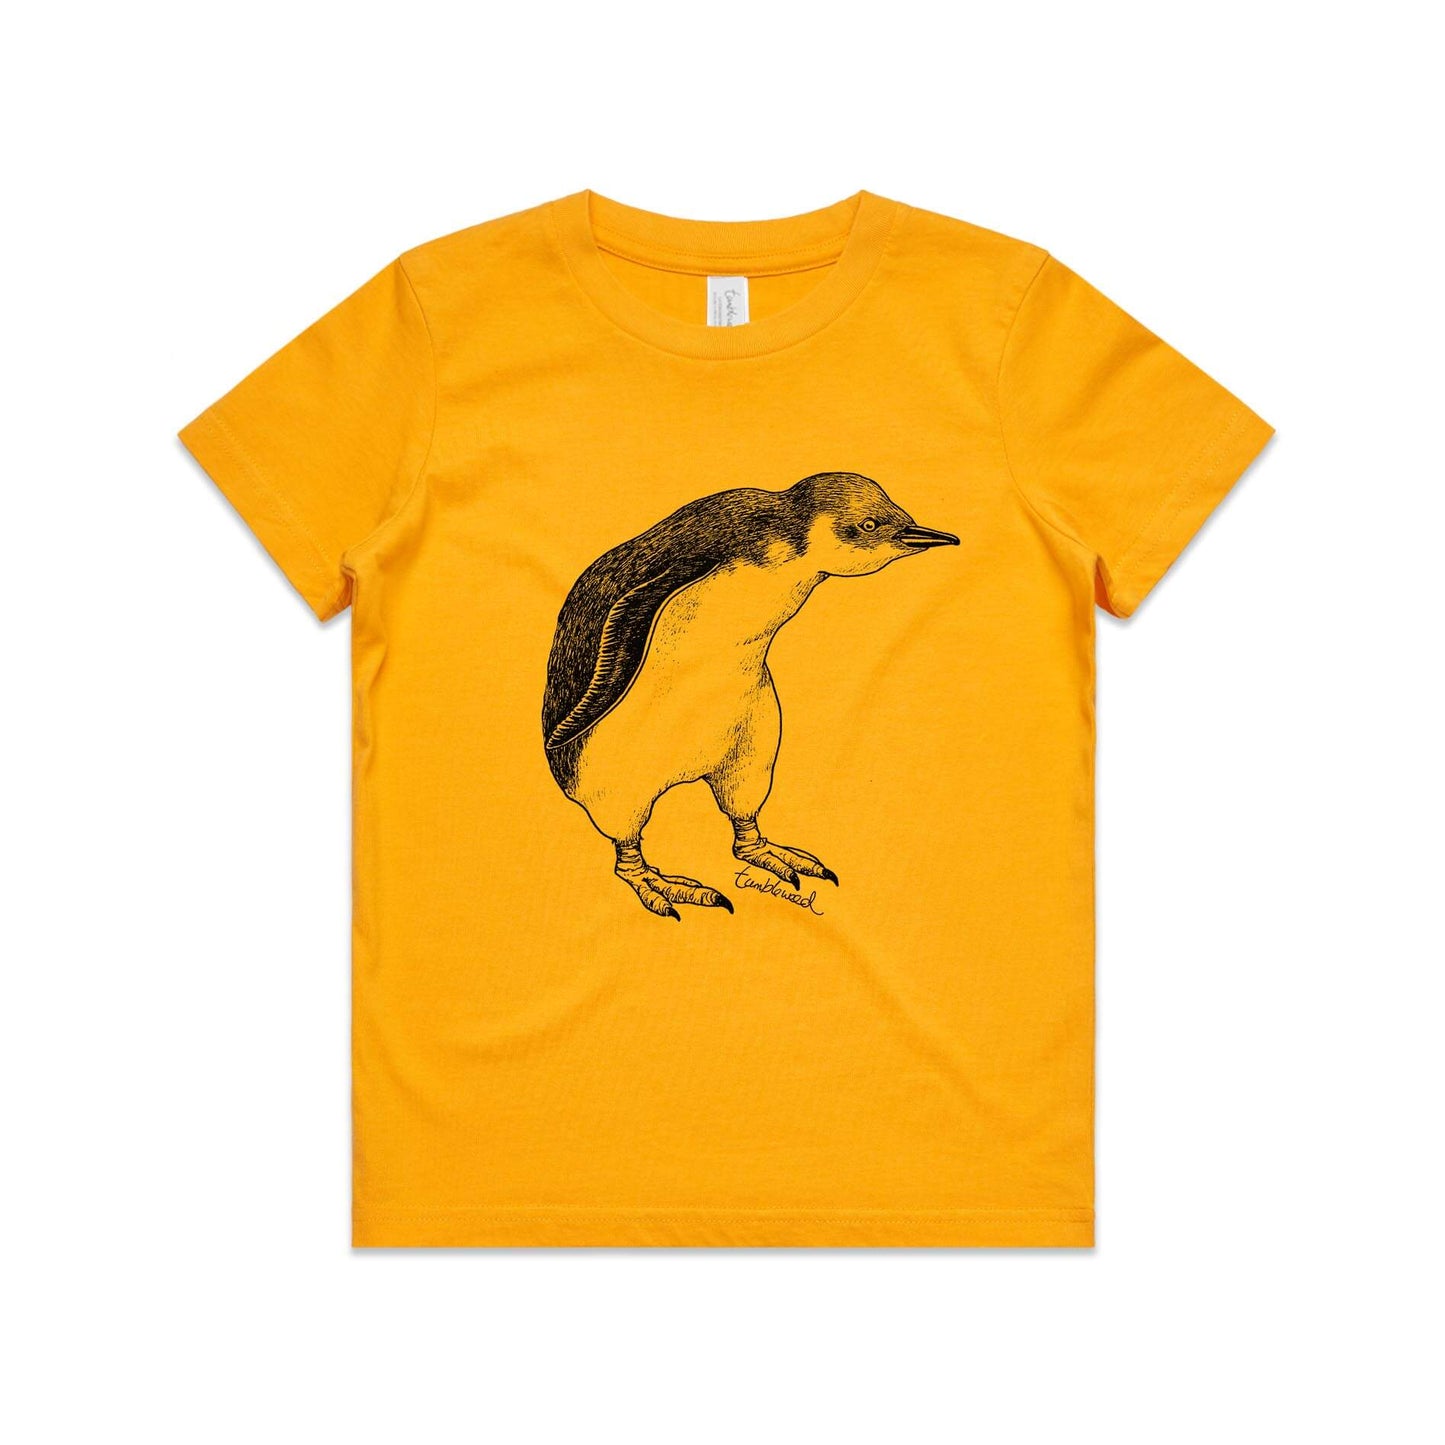 Gold, cotton kids' t-shirt with screen printed Kids kororā/little penguin design.